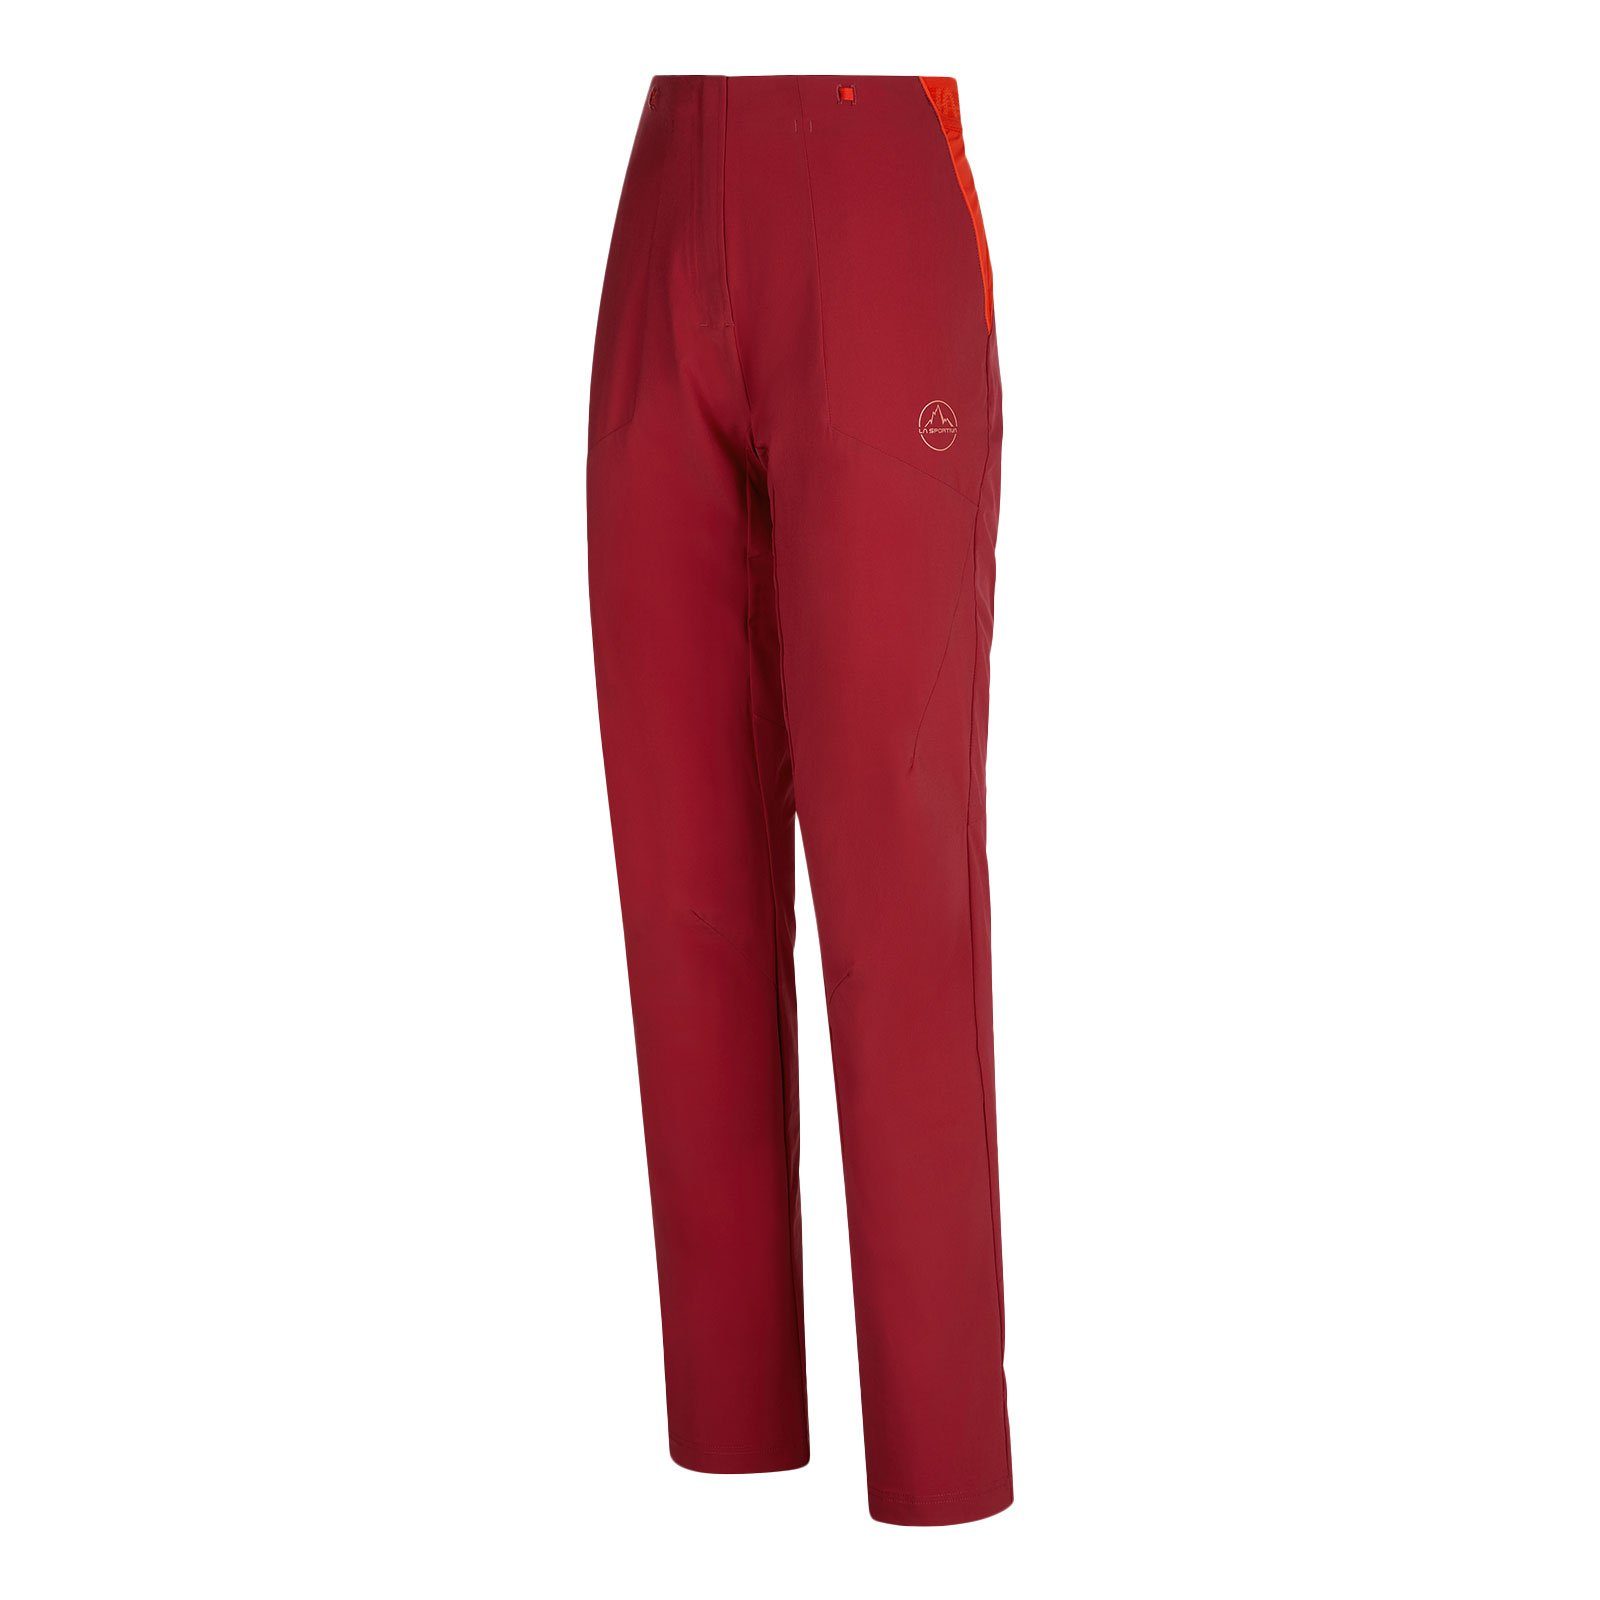 La Sportiva Trekkinghose Brush Pant aus besonders leichtem, elastischem und atmungsaktivem Material 323322 velvet / cherry tomato